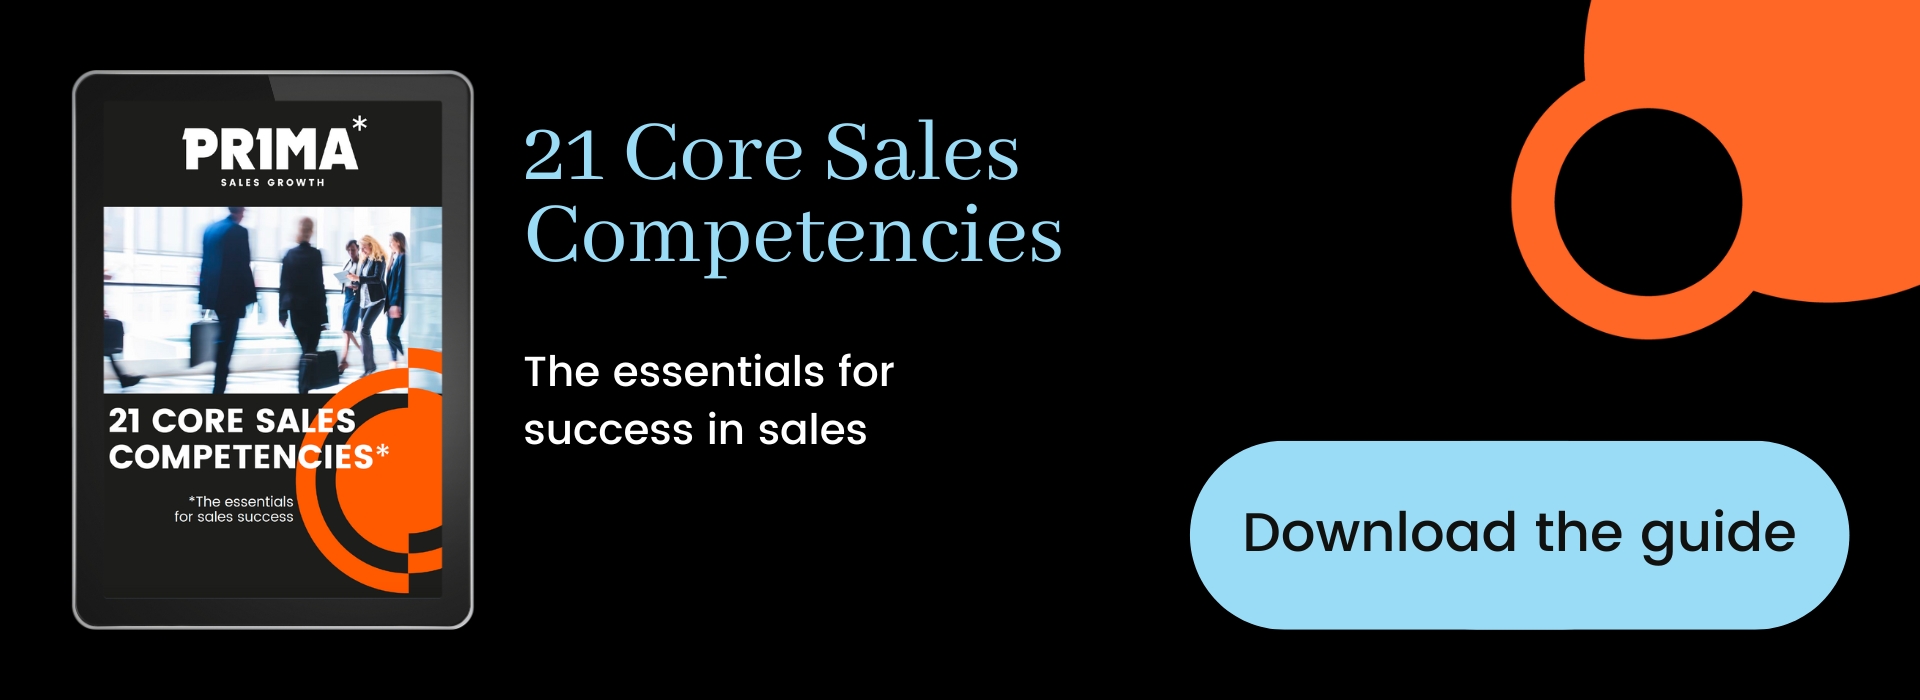 21 core sales competencies